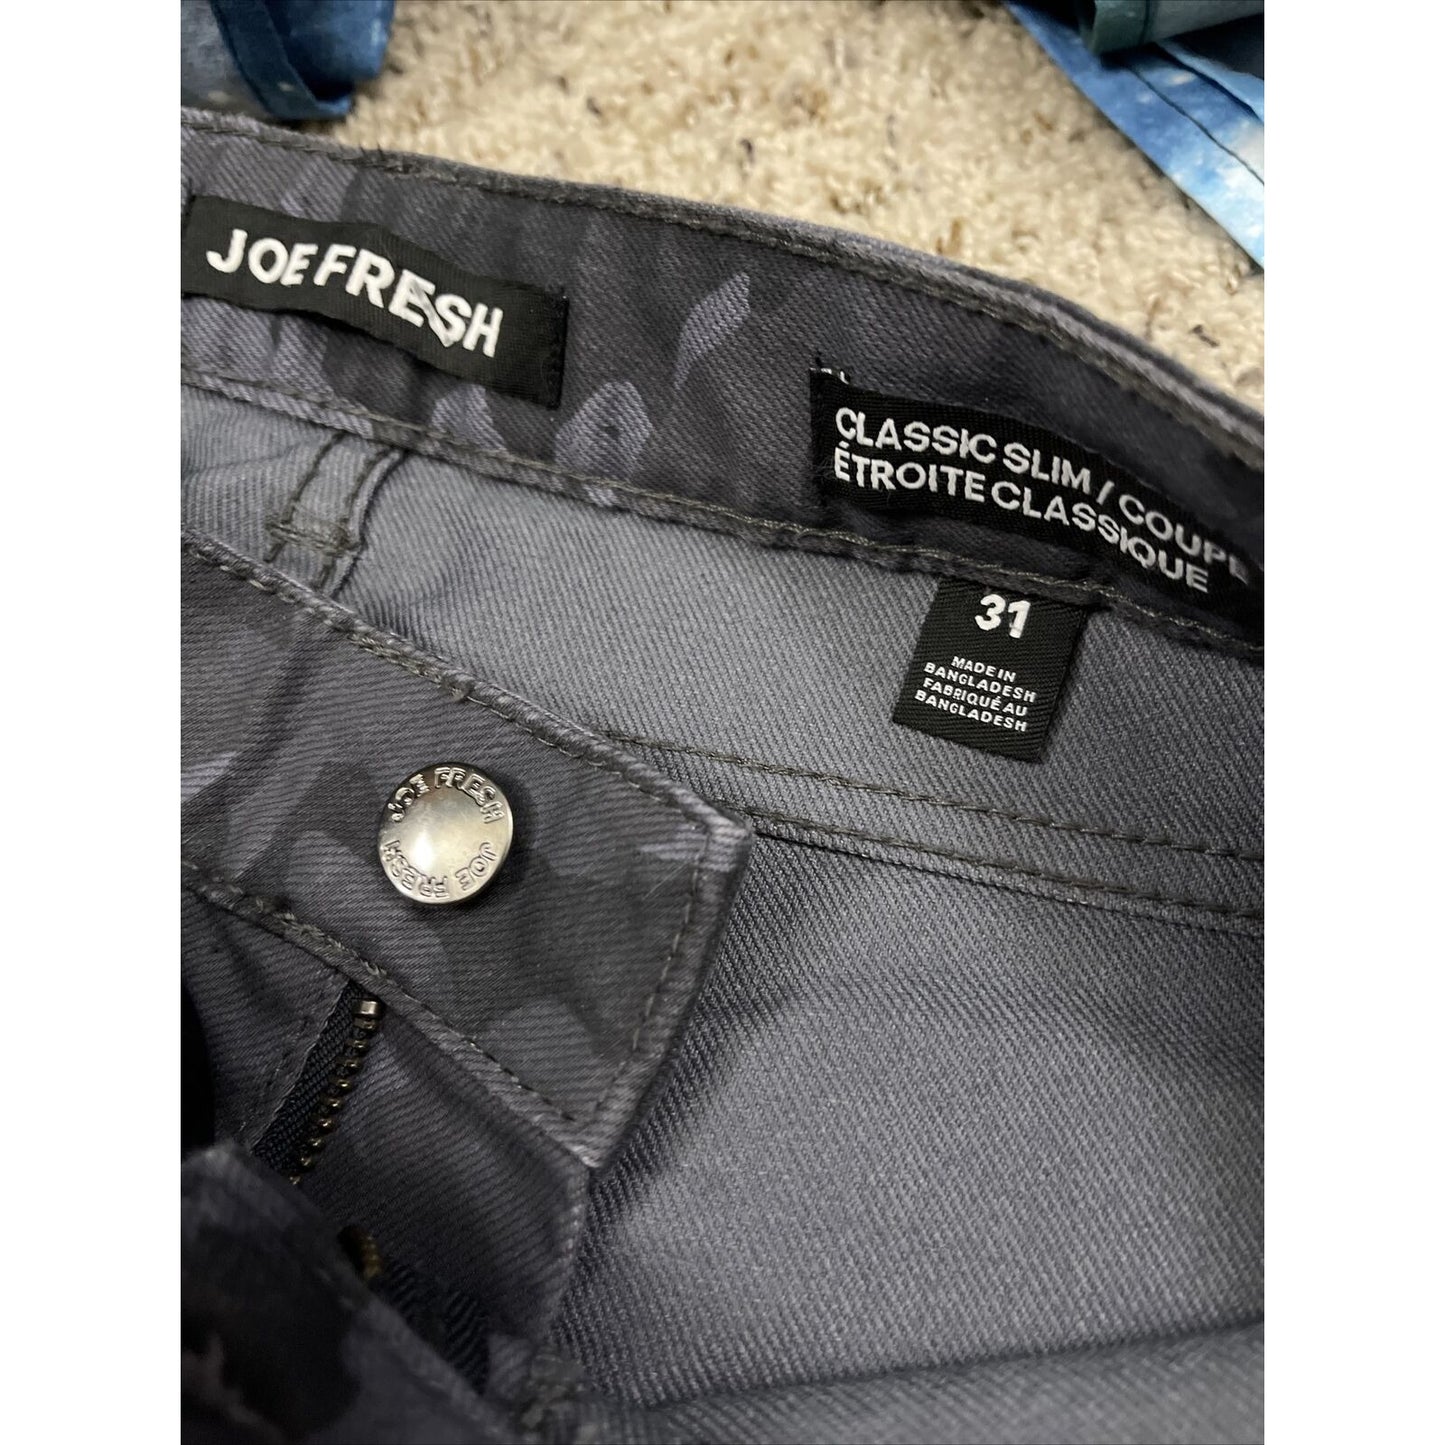 Men’s Joe Fresh gray camo floral classic slim jeans 31 x ~32